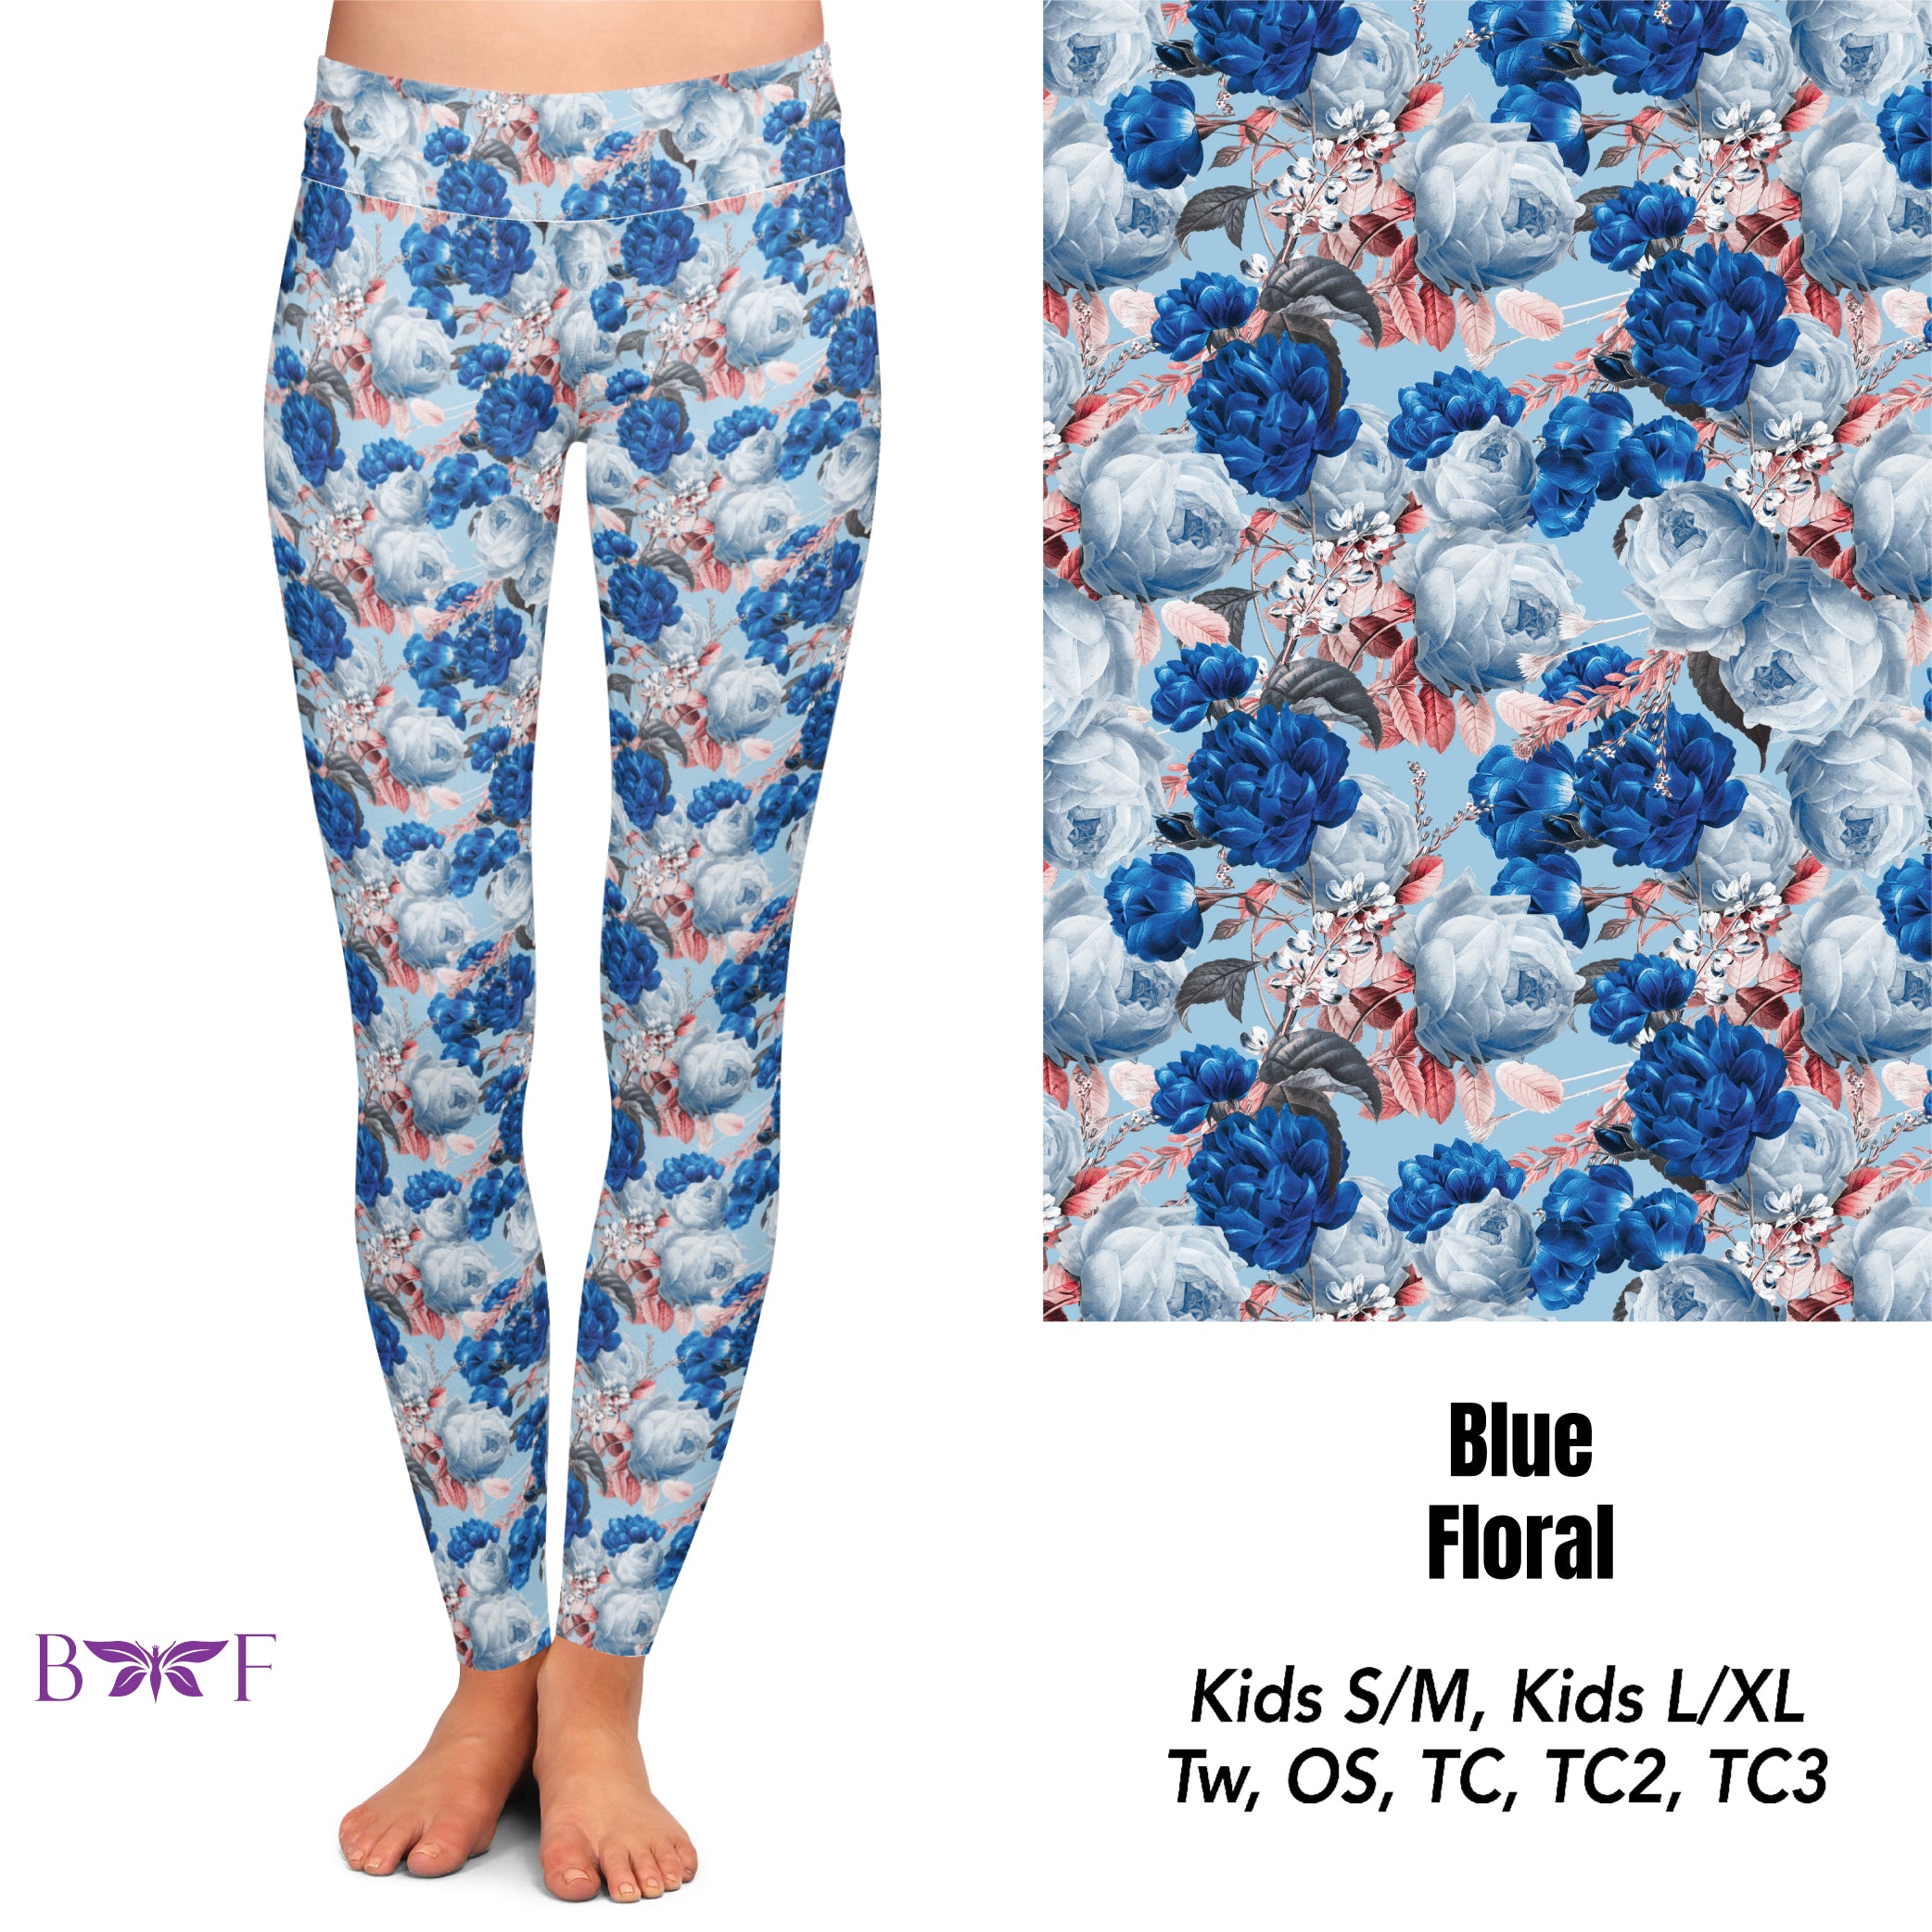 Blue Floral Leggings, Capris, and 7" Jogger Shorts